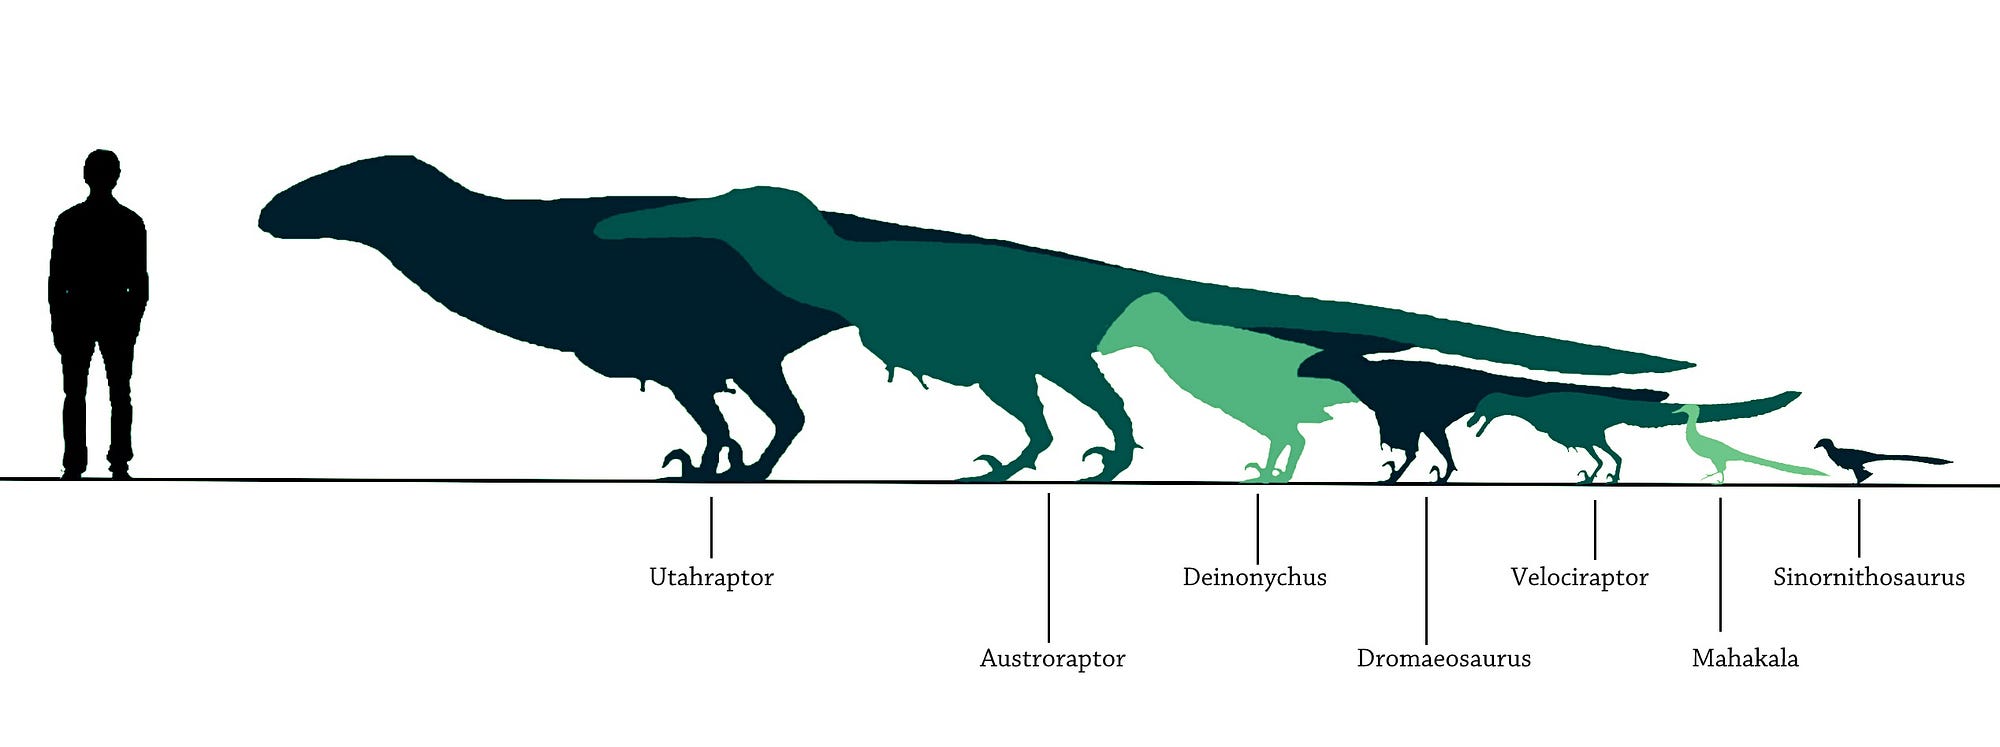 Dromaeosauridae: Meet the 'Raptors' of the Mesozoic, by Panos Grigorakakis, Tales of Prehistory